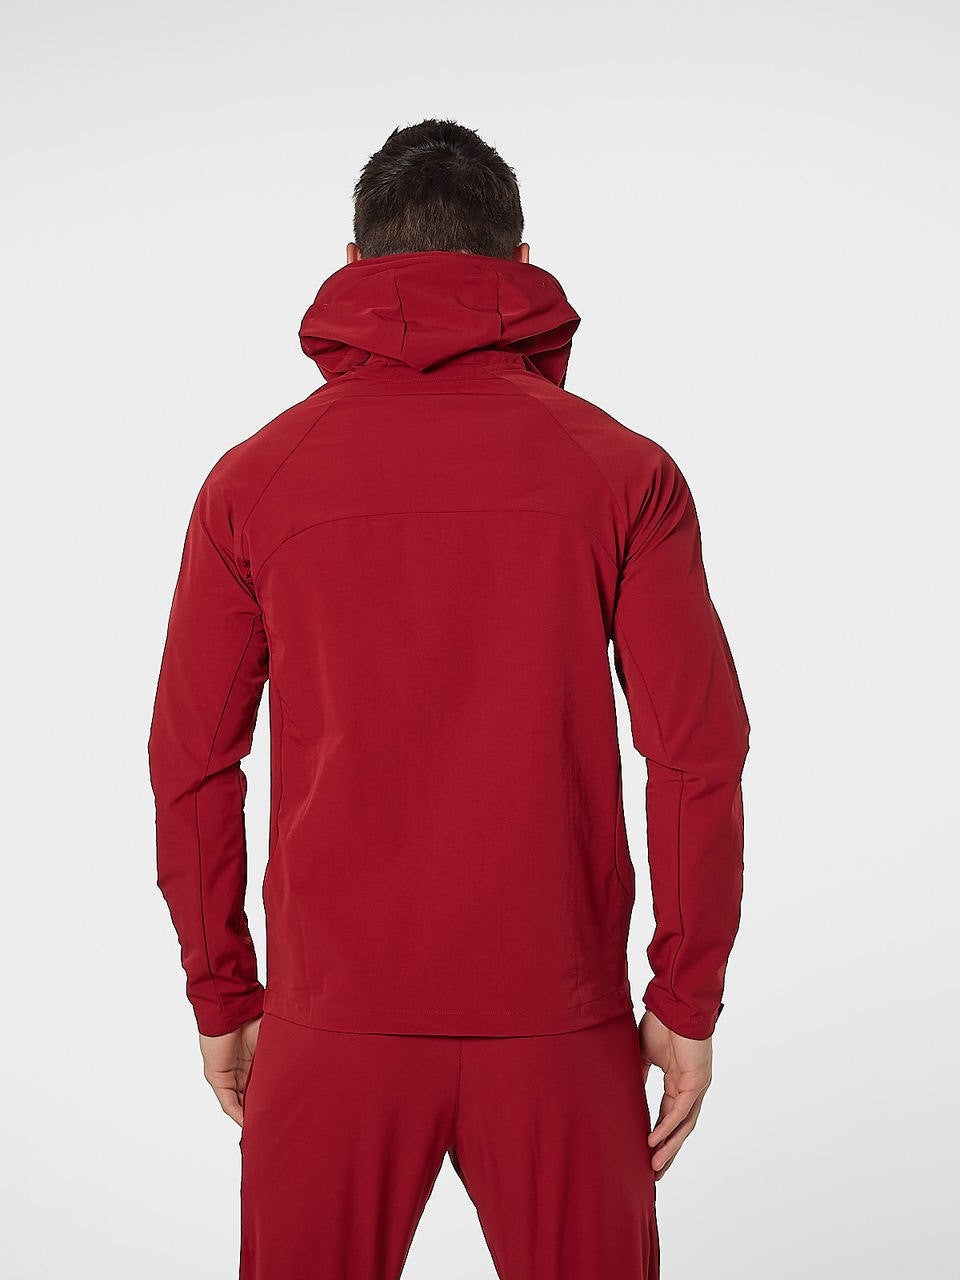 PHYSIQ APPAREL Aero Jacket Men's Zipped Track Top Red - Activemen Clothing